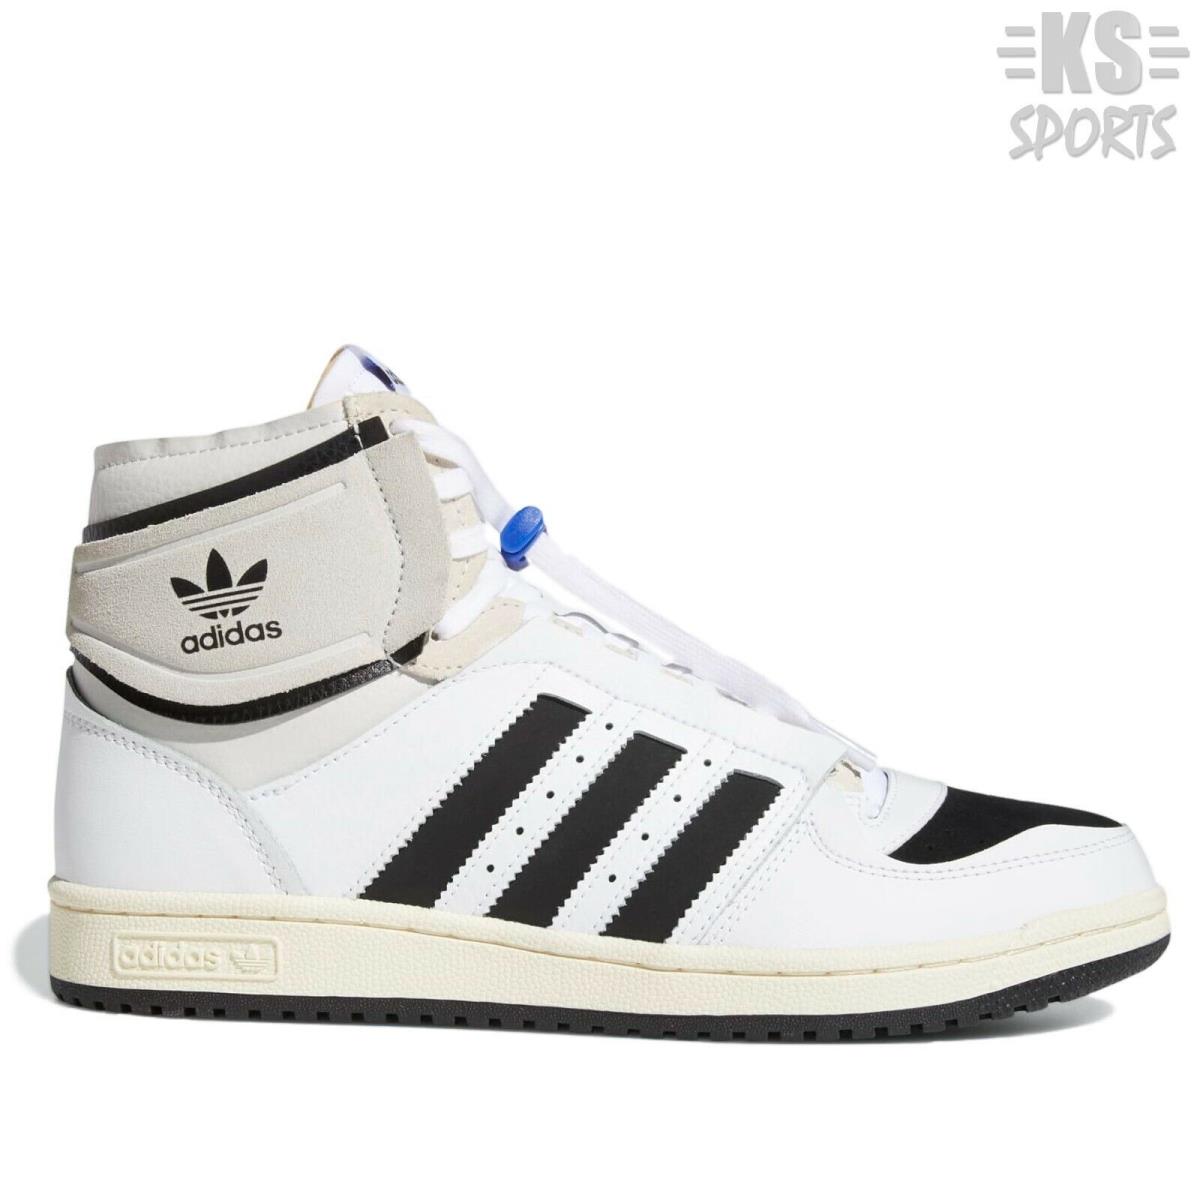 Adidas Top Ten DE Mid `white Black` Men`s Retro Basketball Shoes Q46255 - Cloud White/Core Black/Bold Blue